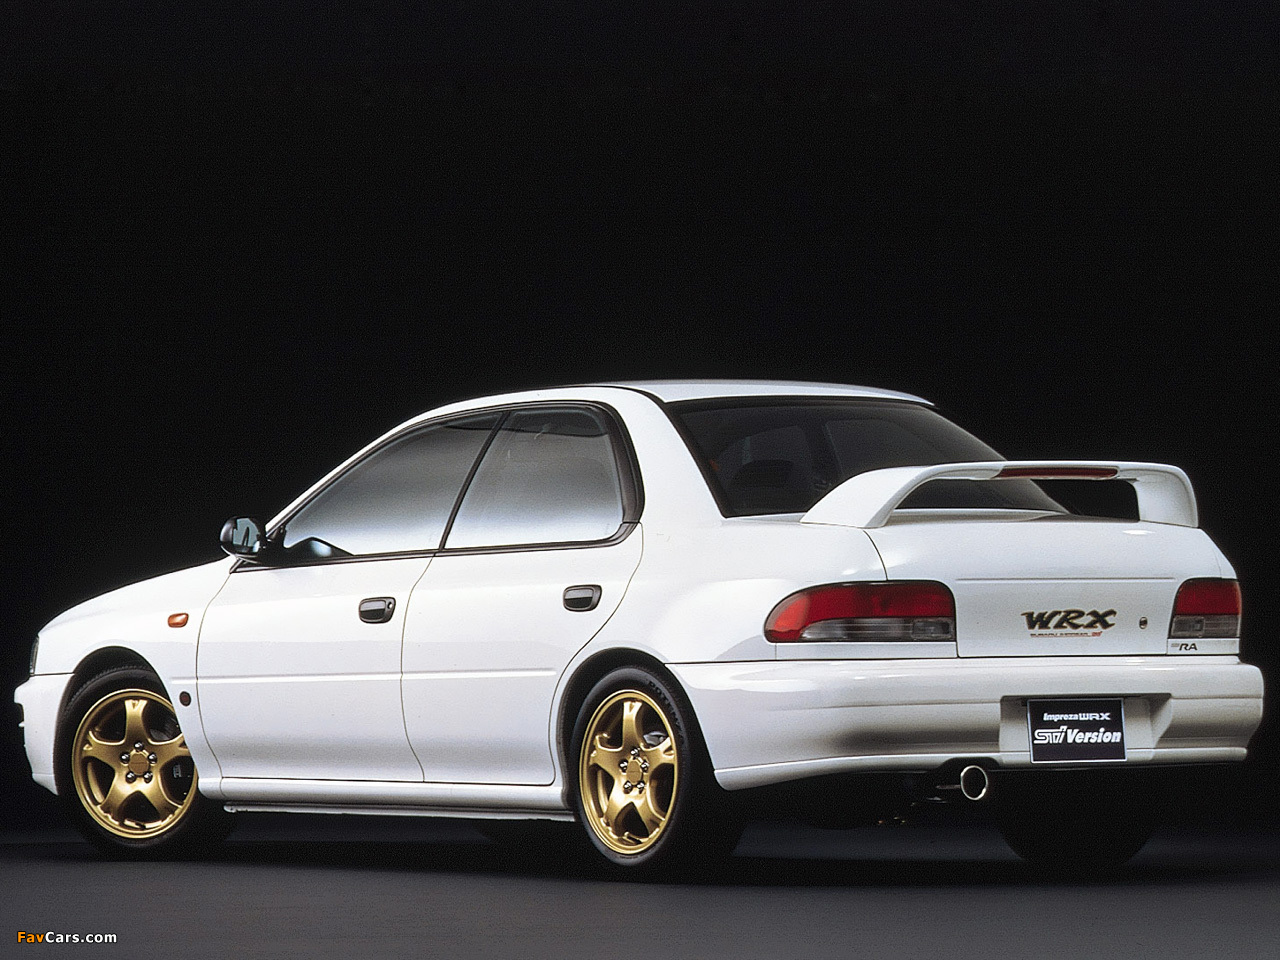 Images of Subaru Impreza WRX STi Type RA 199798 (1280x960)